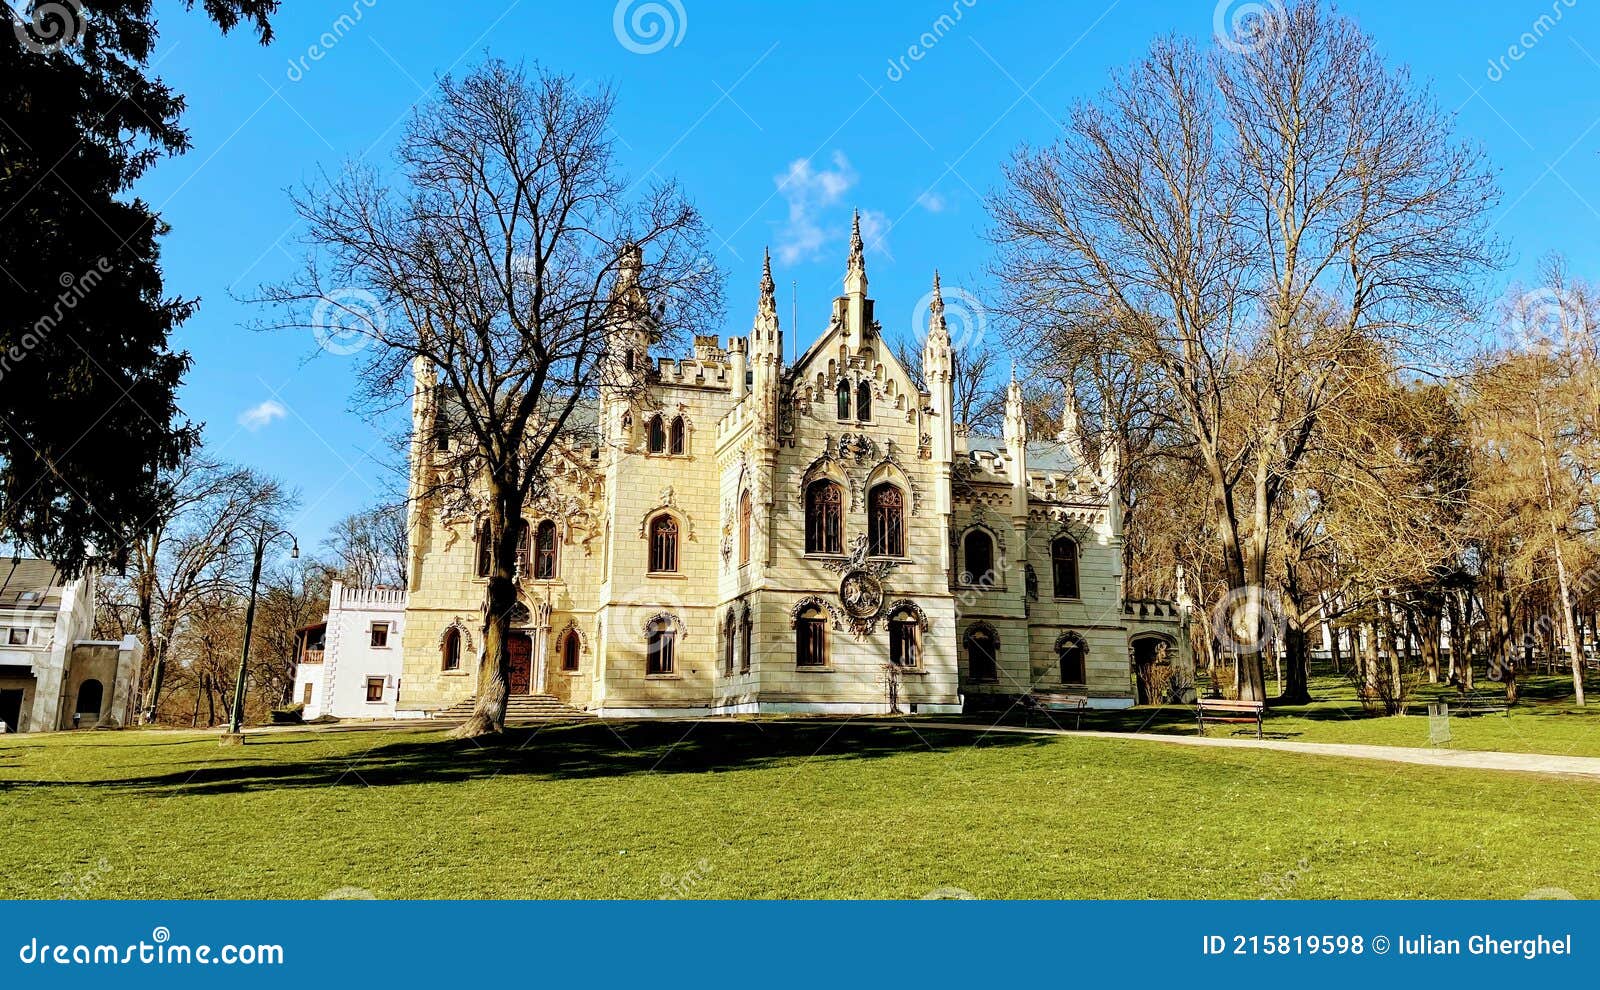 sturdza palace - neogothic - sturdza castle - moldova